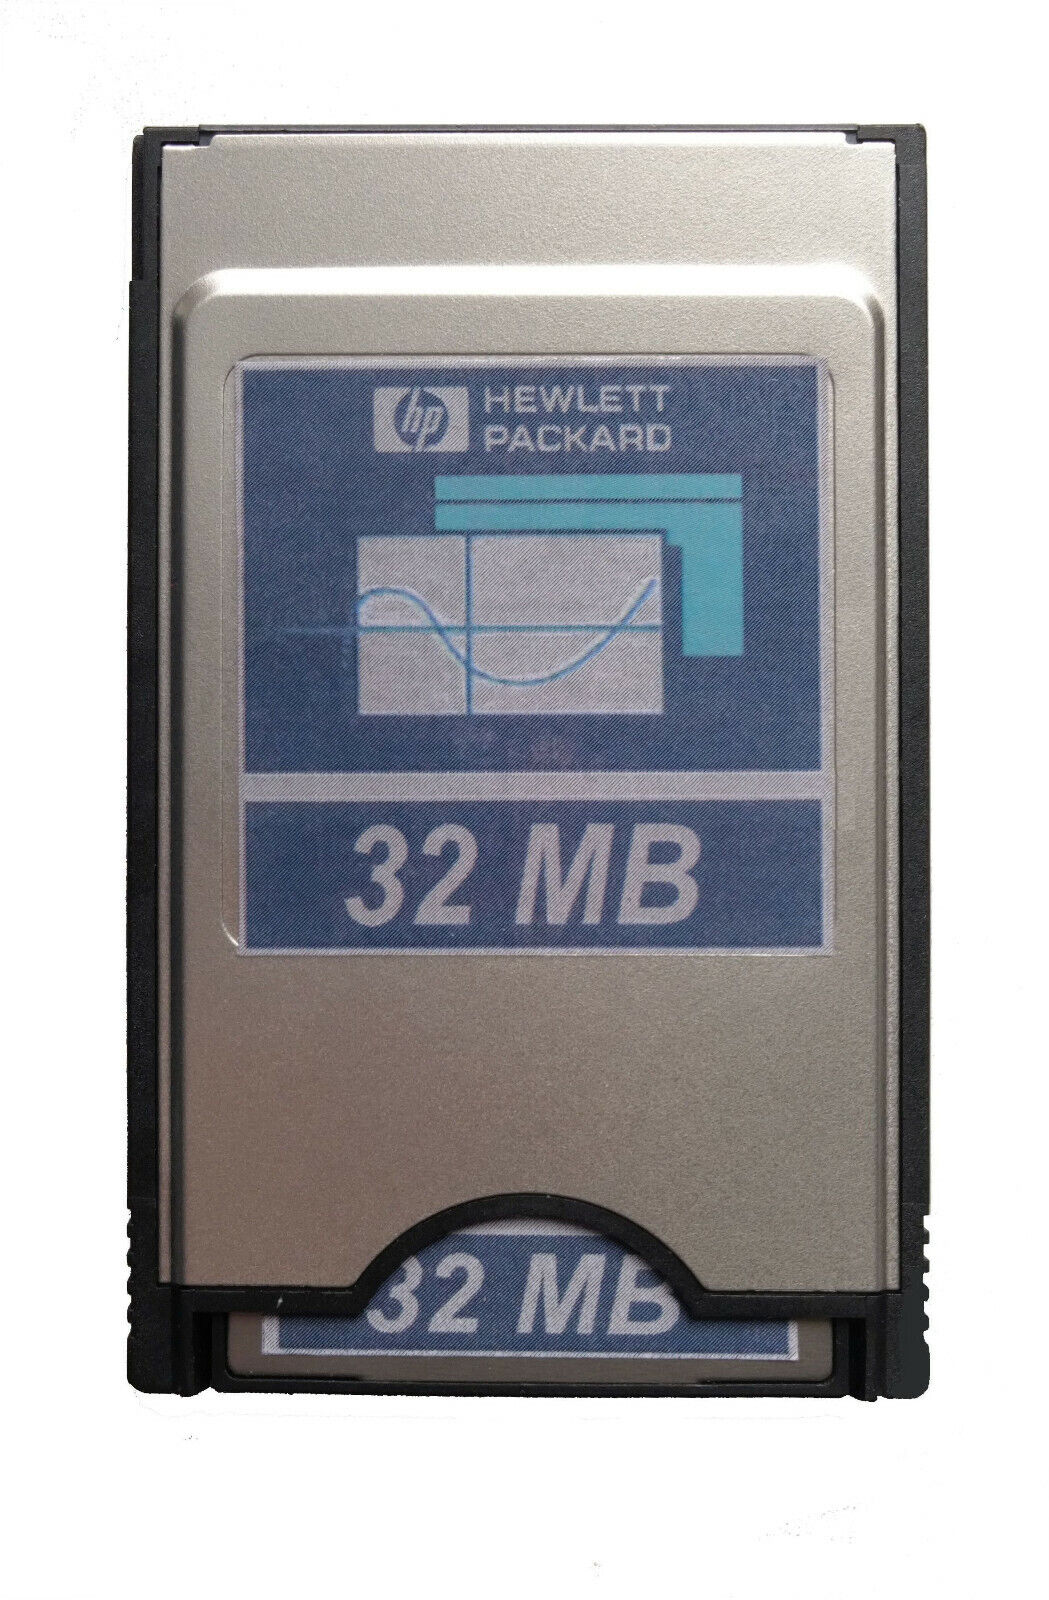 HP 95LX PALMTOP Compact Flash PCMCIA Card 32MB 